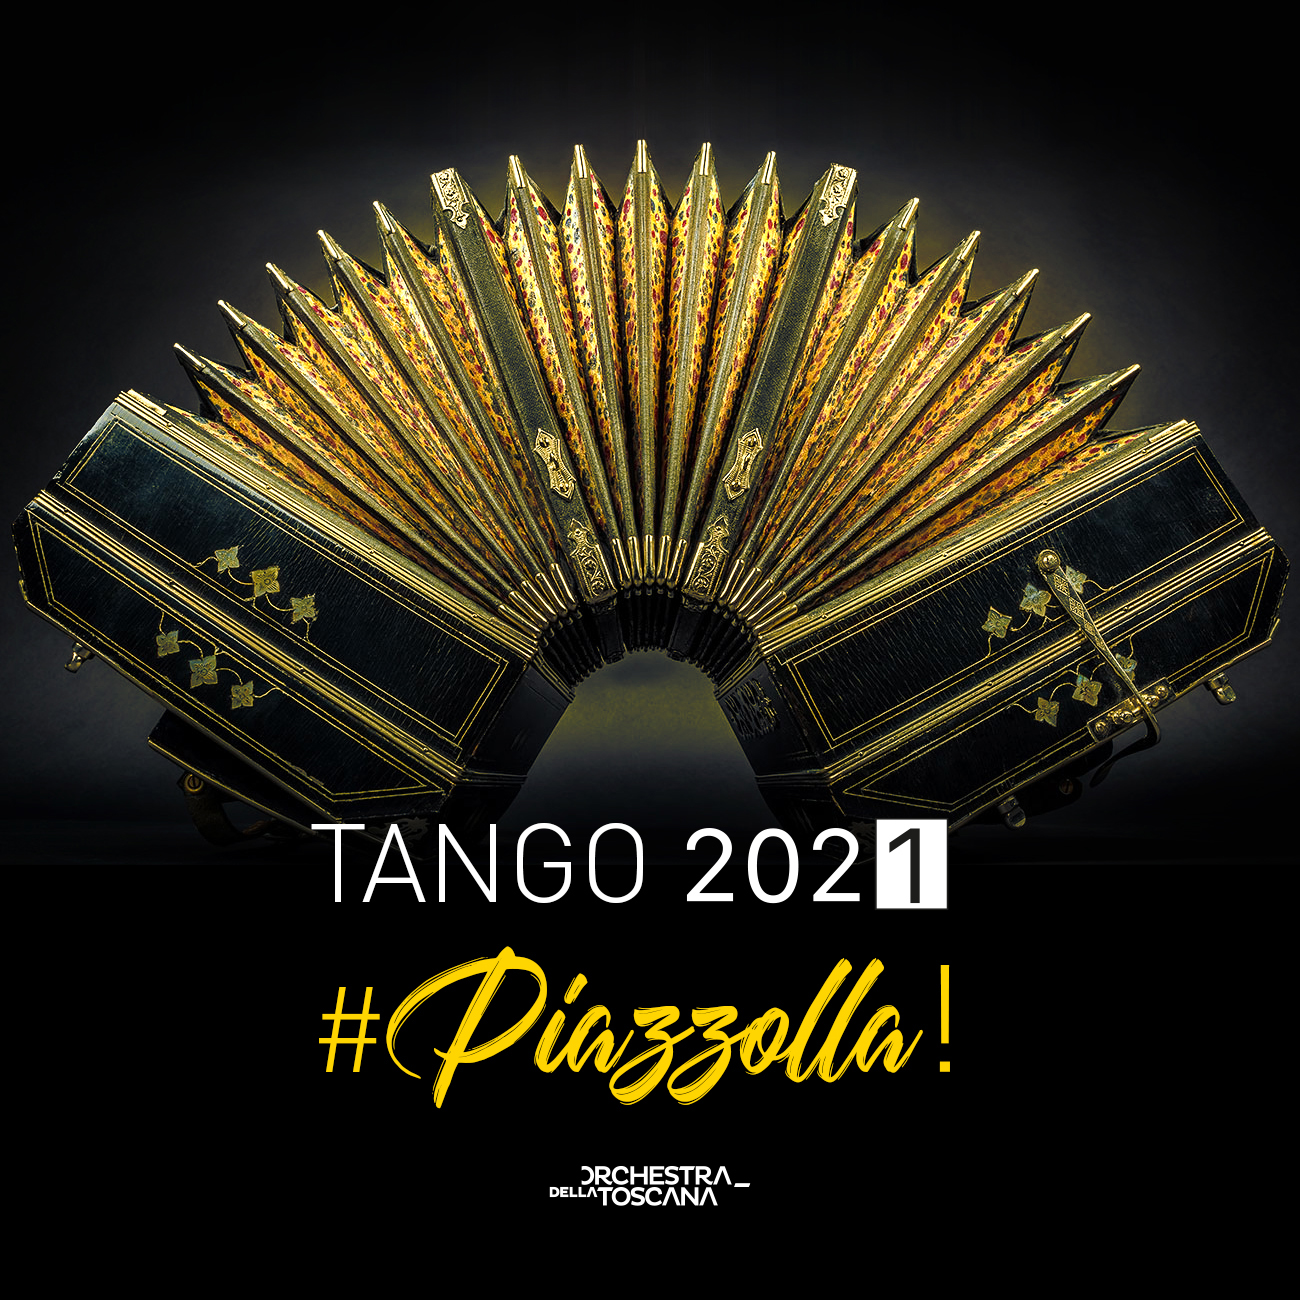 ORT Tango Piazzolla, locandina